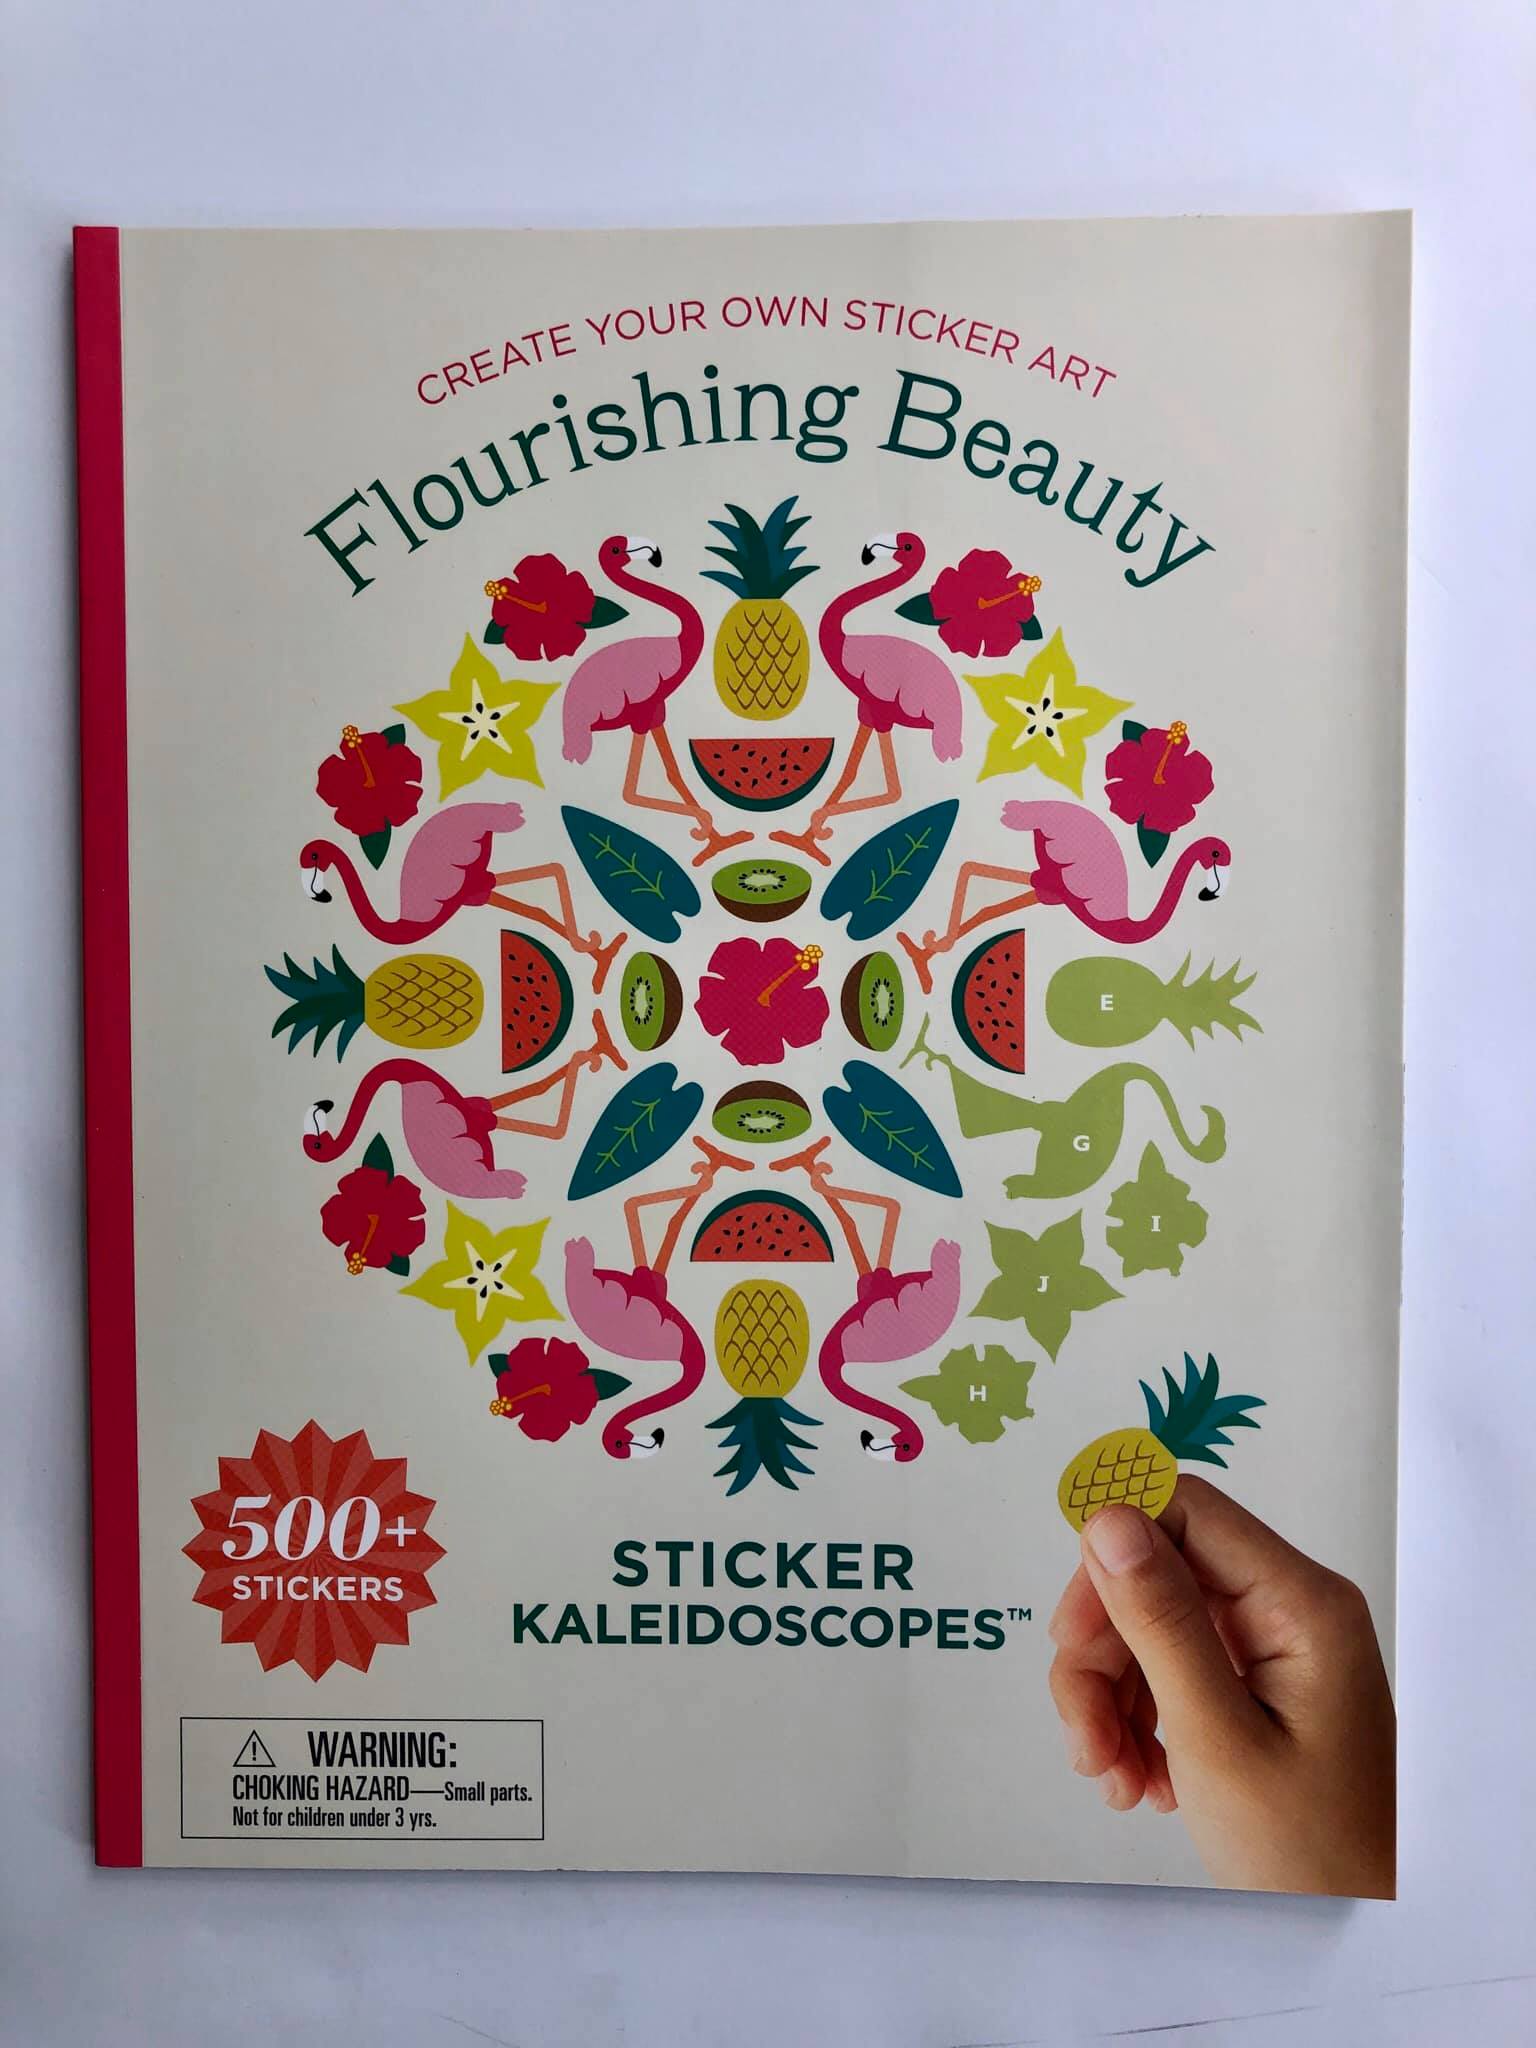 Mrs. Grossman’s Sticker Kaleidoscopes Activity Books - Flourishing Beauty